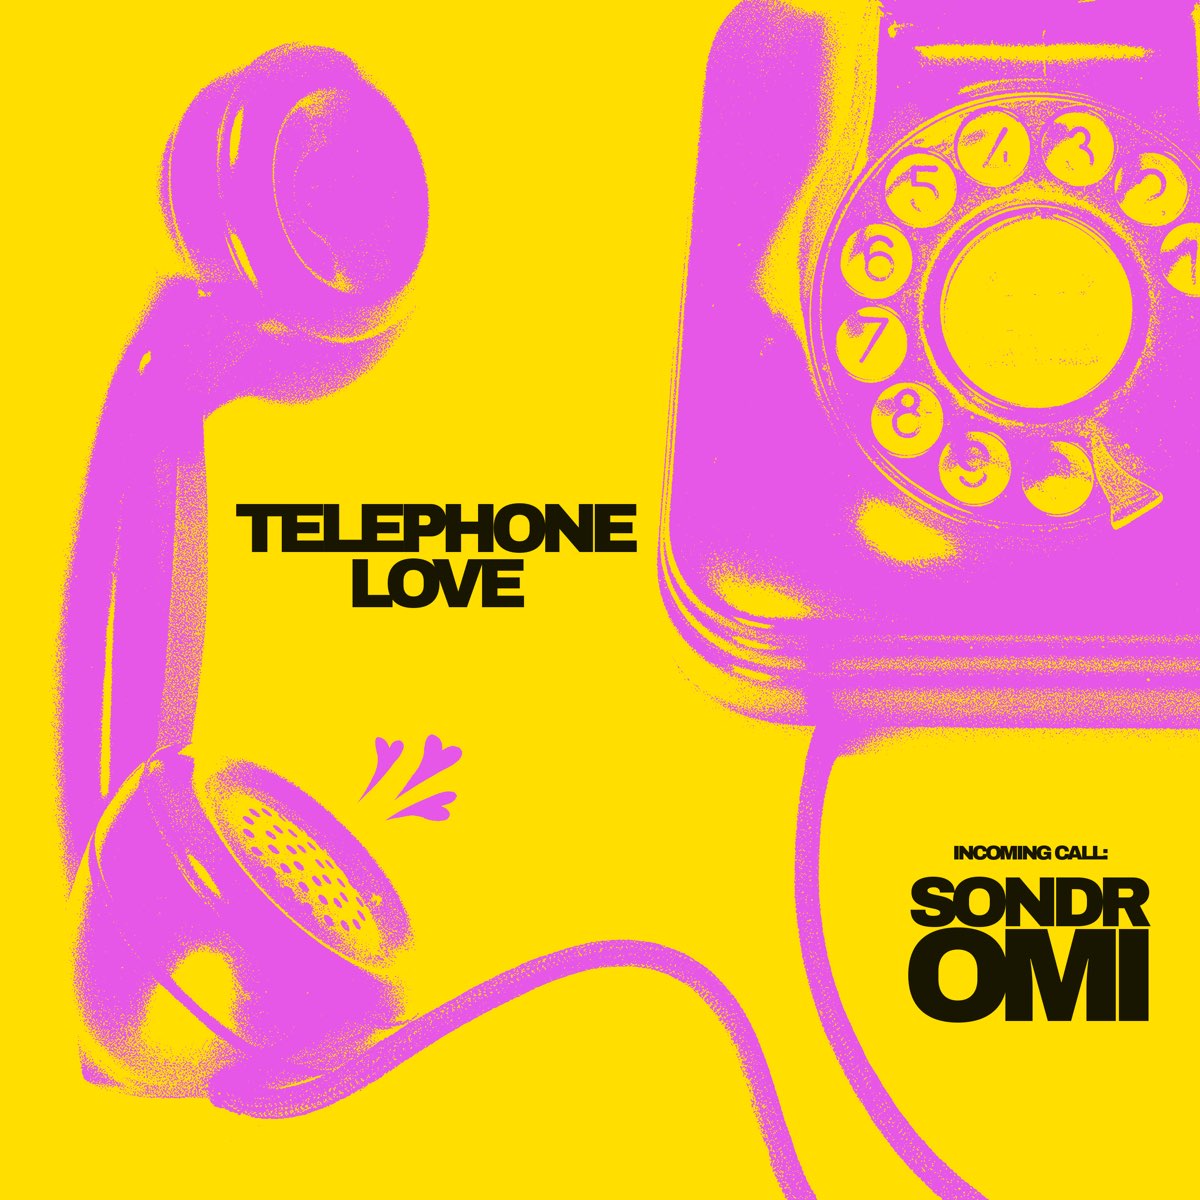 Песни на телефон послушать. Телефоны Lovely. Телефон Song. Love Phone. Музыка для телефона LP.